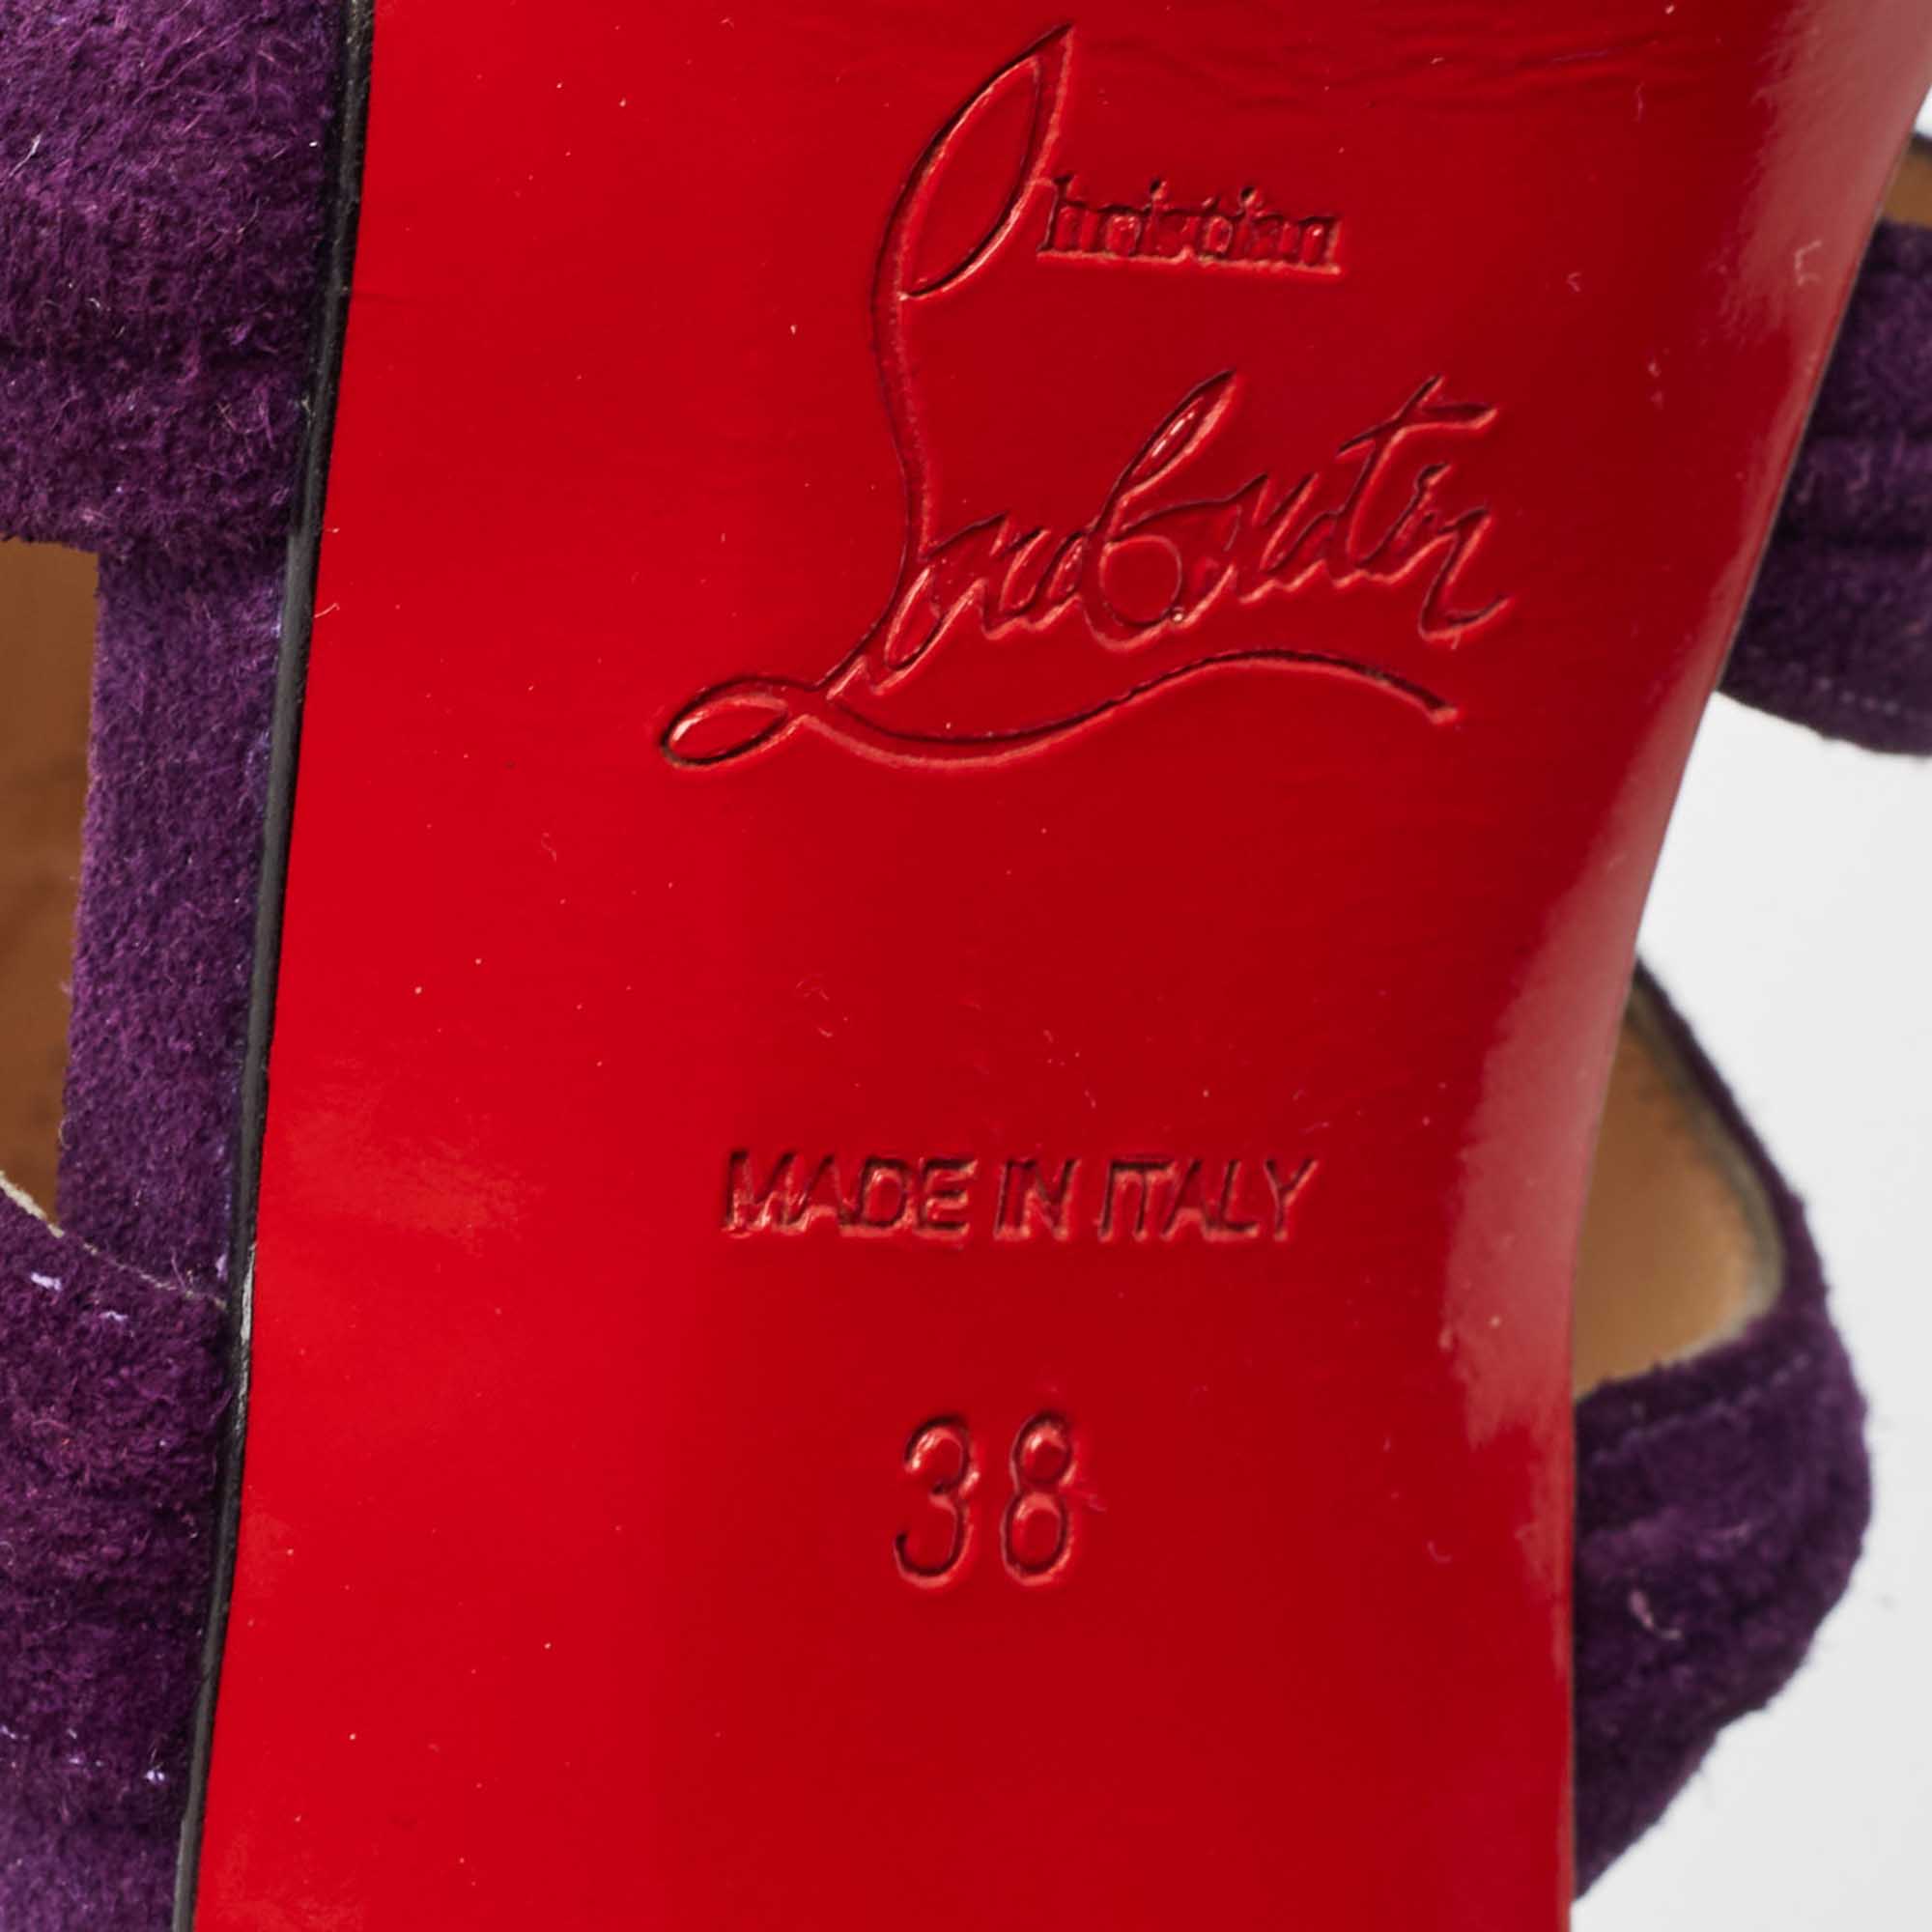 Christian Louboutin Purple Pleated Suede Tinazata Sandals Size 38